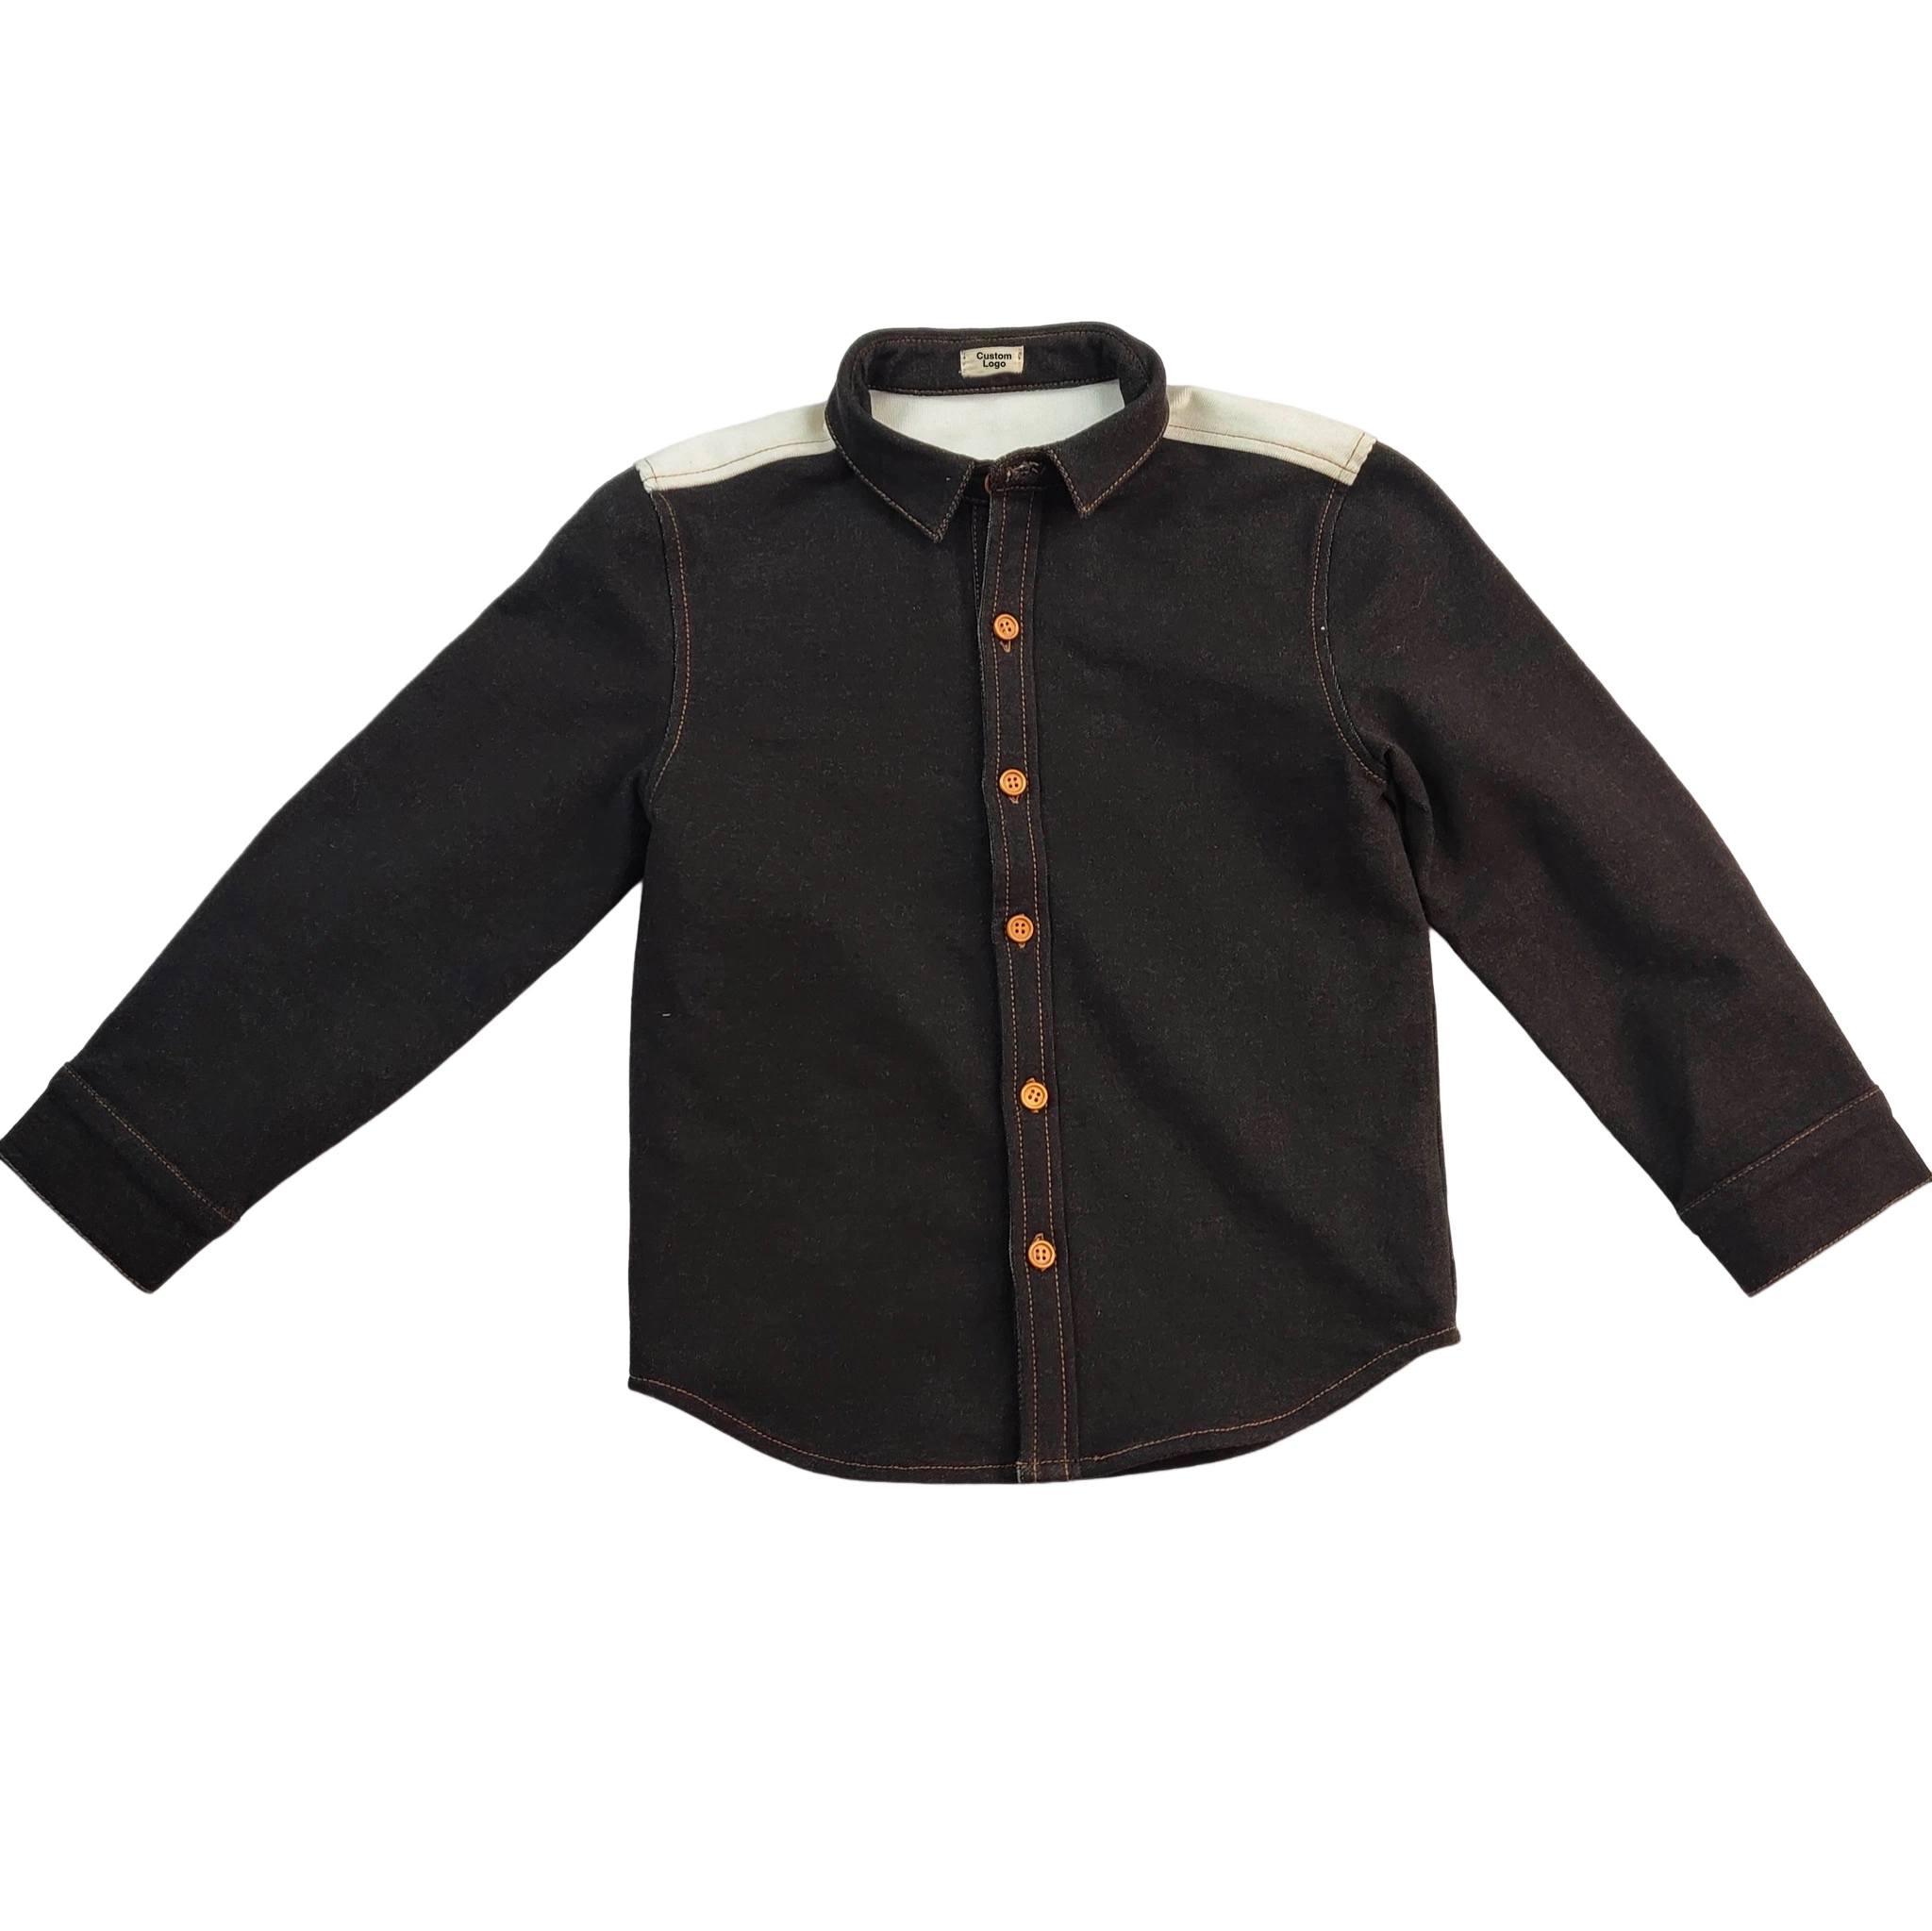 Premium Boy Demin Custom Clothing Cotton Children Jacket Button up Long Sleeve Shirt Spring Apparel Clothes Garment Design Embroidery Patch Brand Logo Price